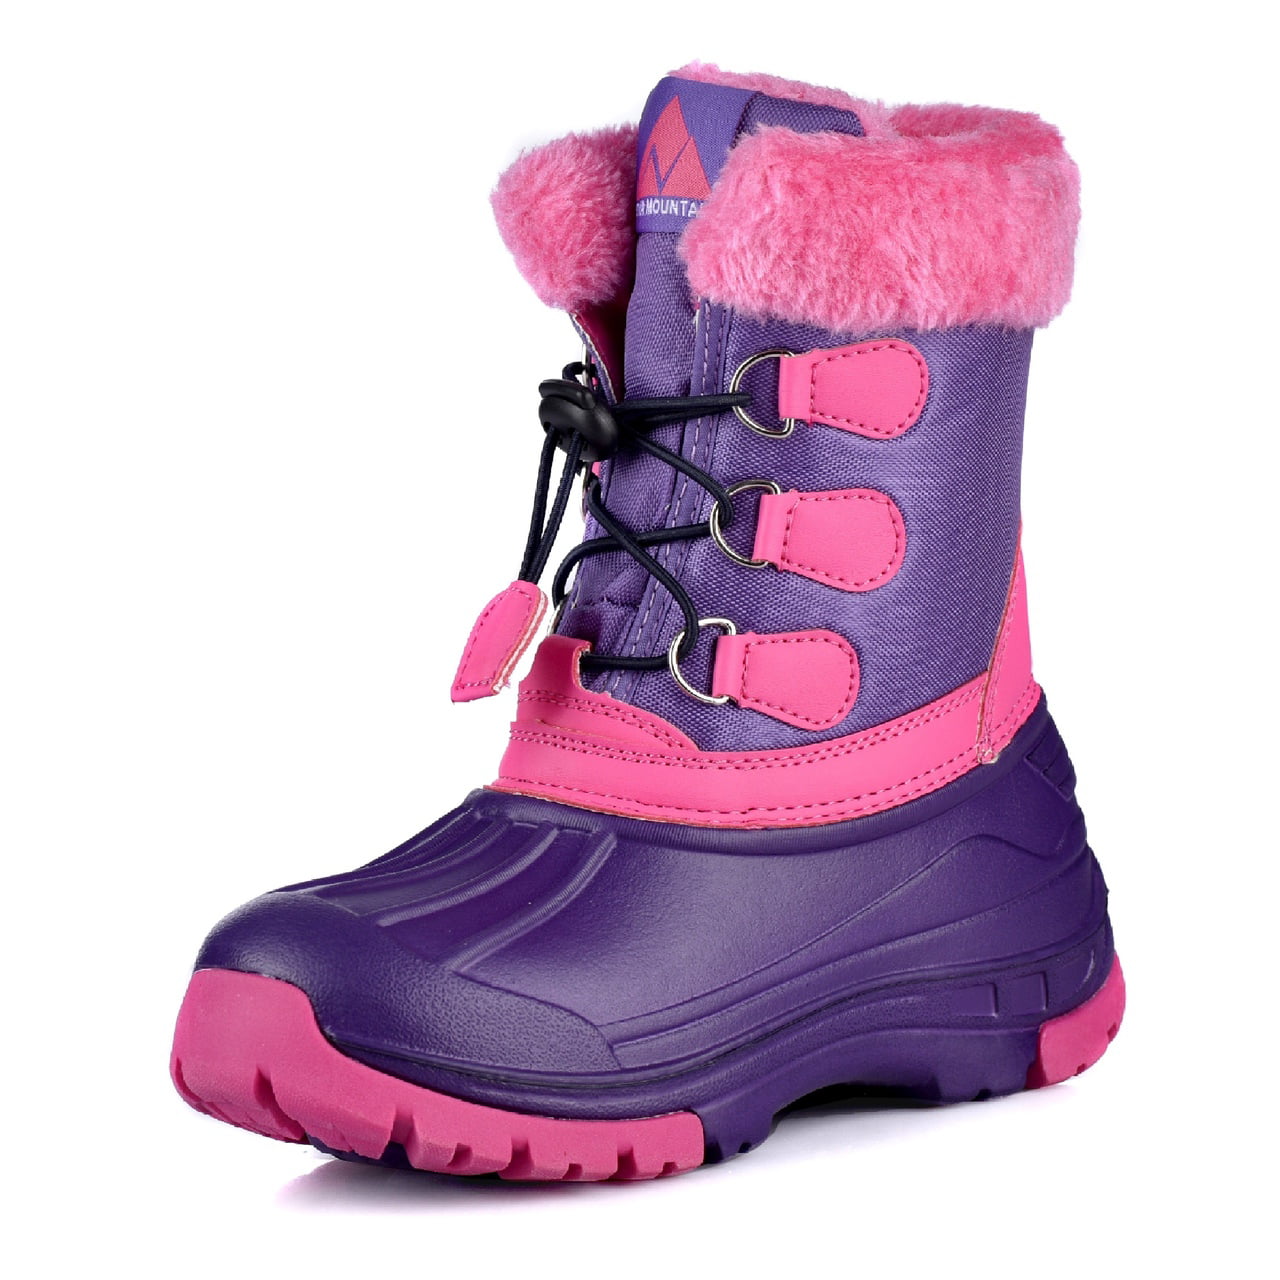 Nova Mountain Boys and Girls Waterproof Winter Snow Boots 